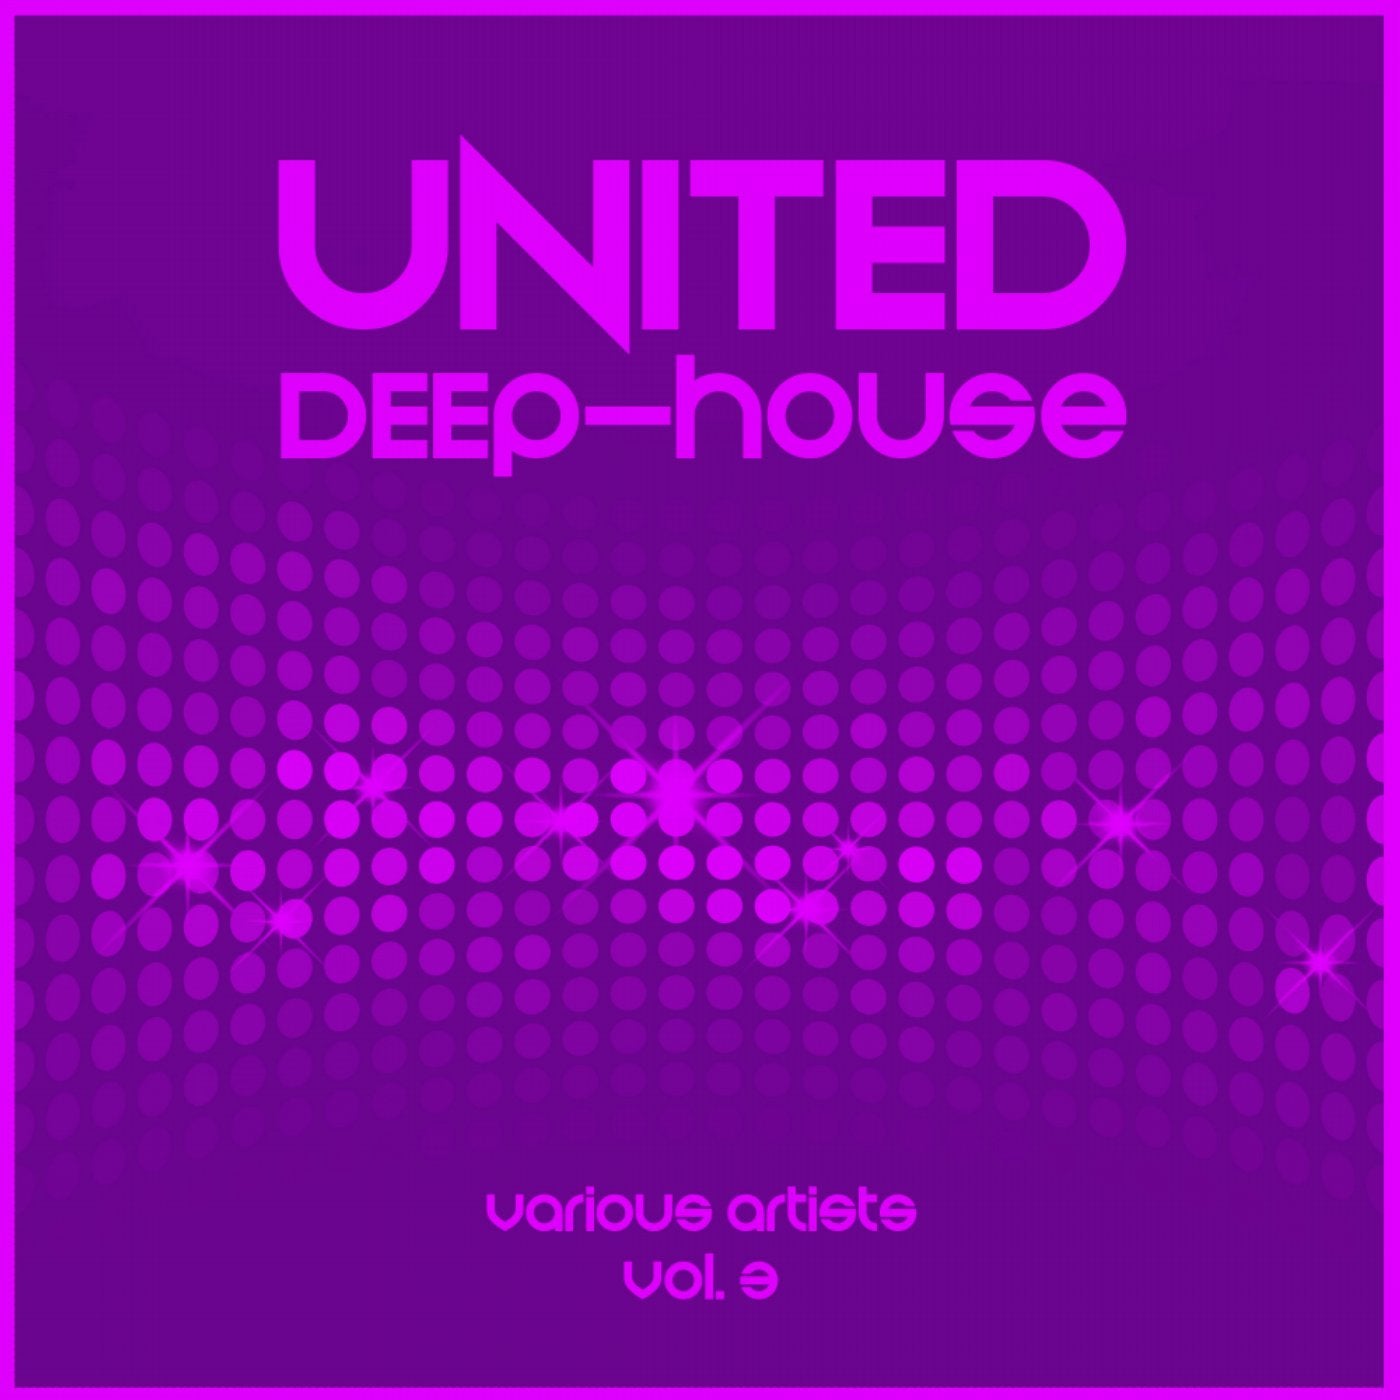 United Deep-House, Vol. 3